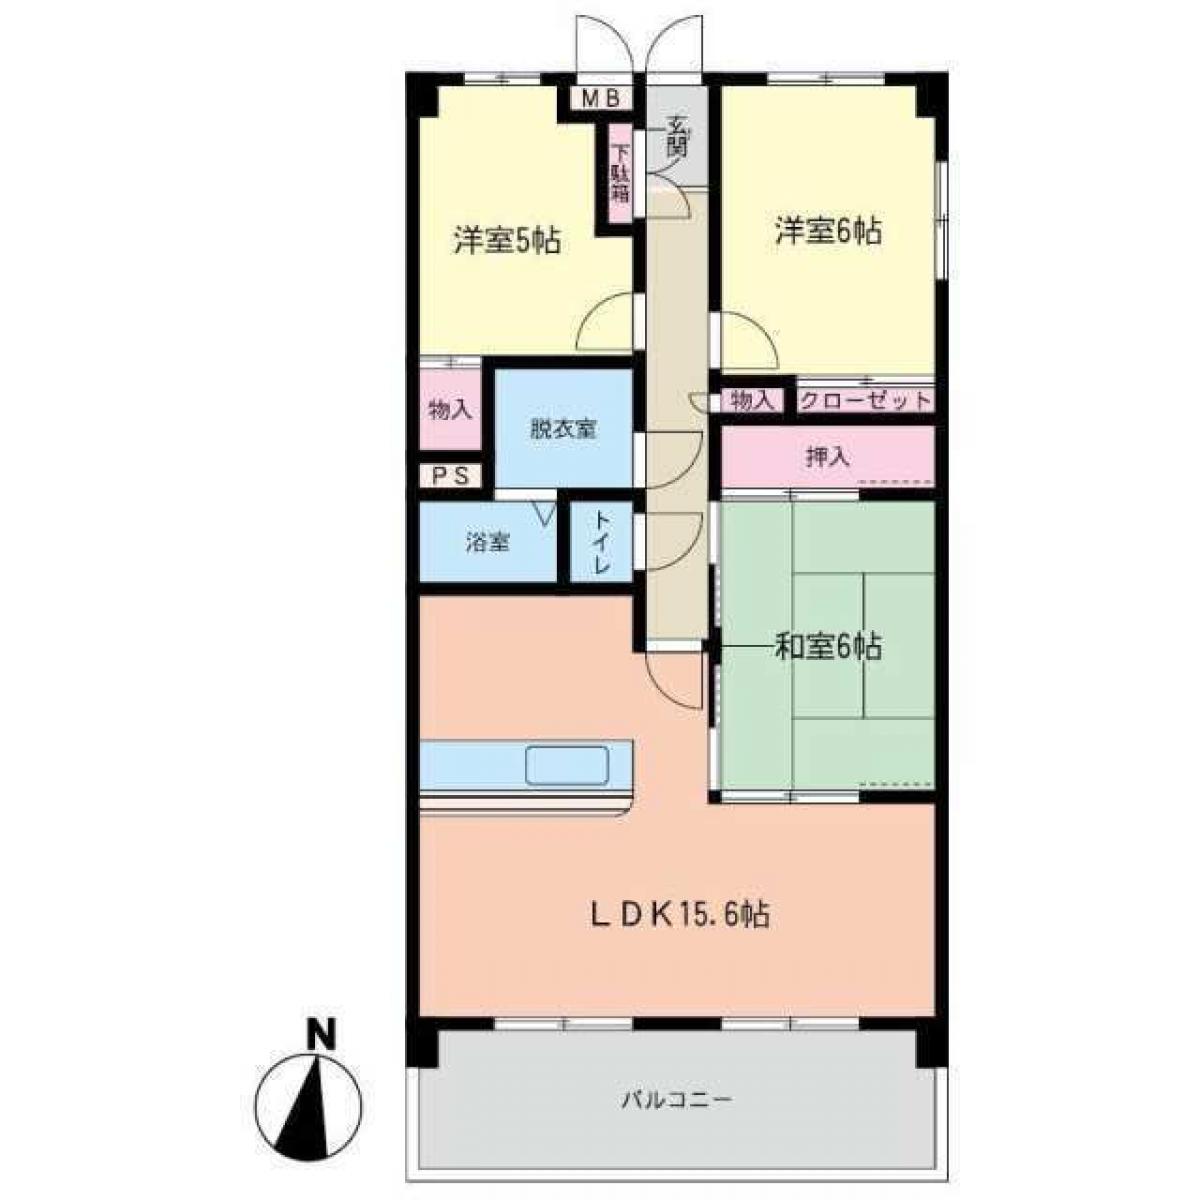 Picture of Apartment For Sale in Kitakyushu Shi Kokuraminami Ku, Fukuoka, Japan